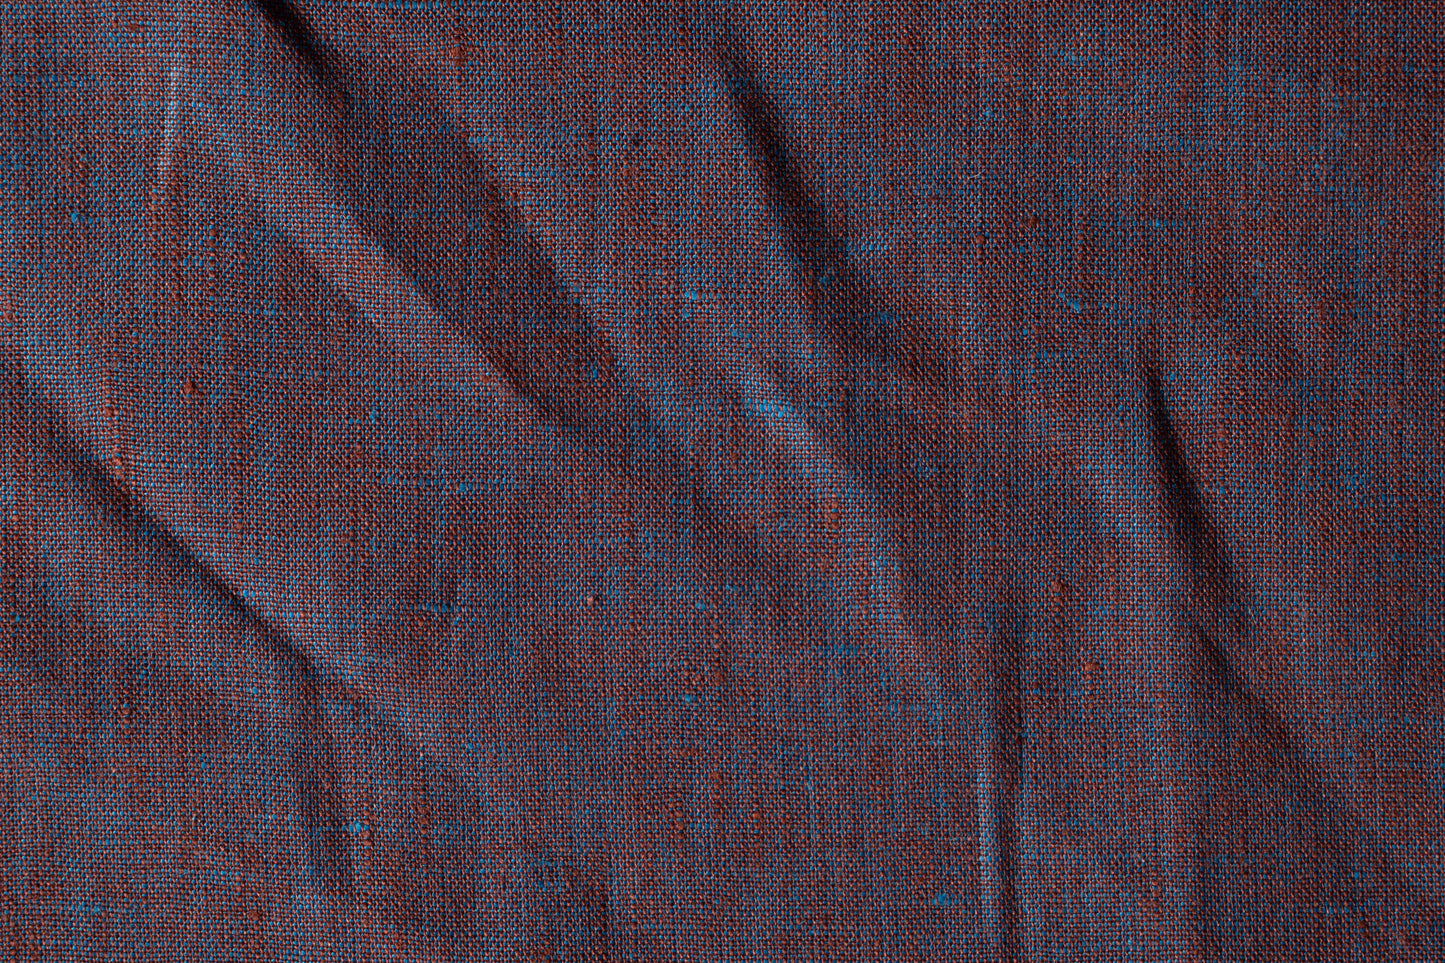 Yarn Dyed Handkerchief Weight 100% Linen (3.7 oz/square yard) Swatch